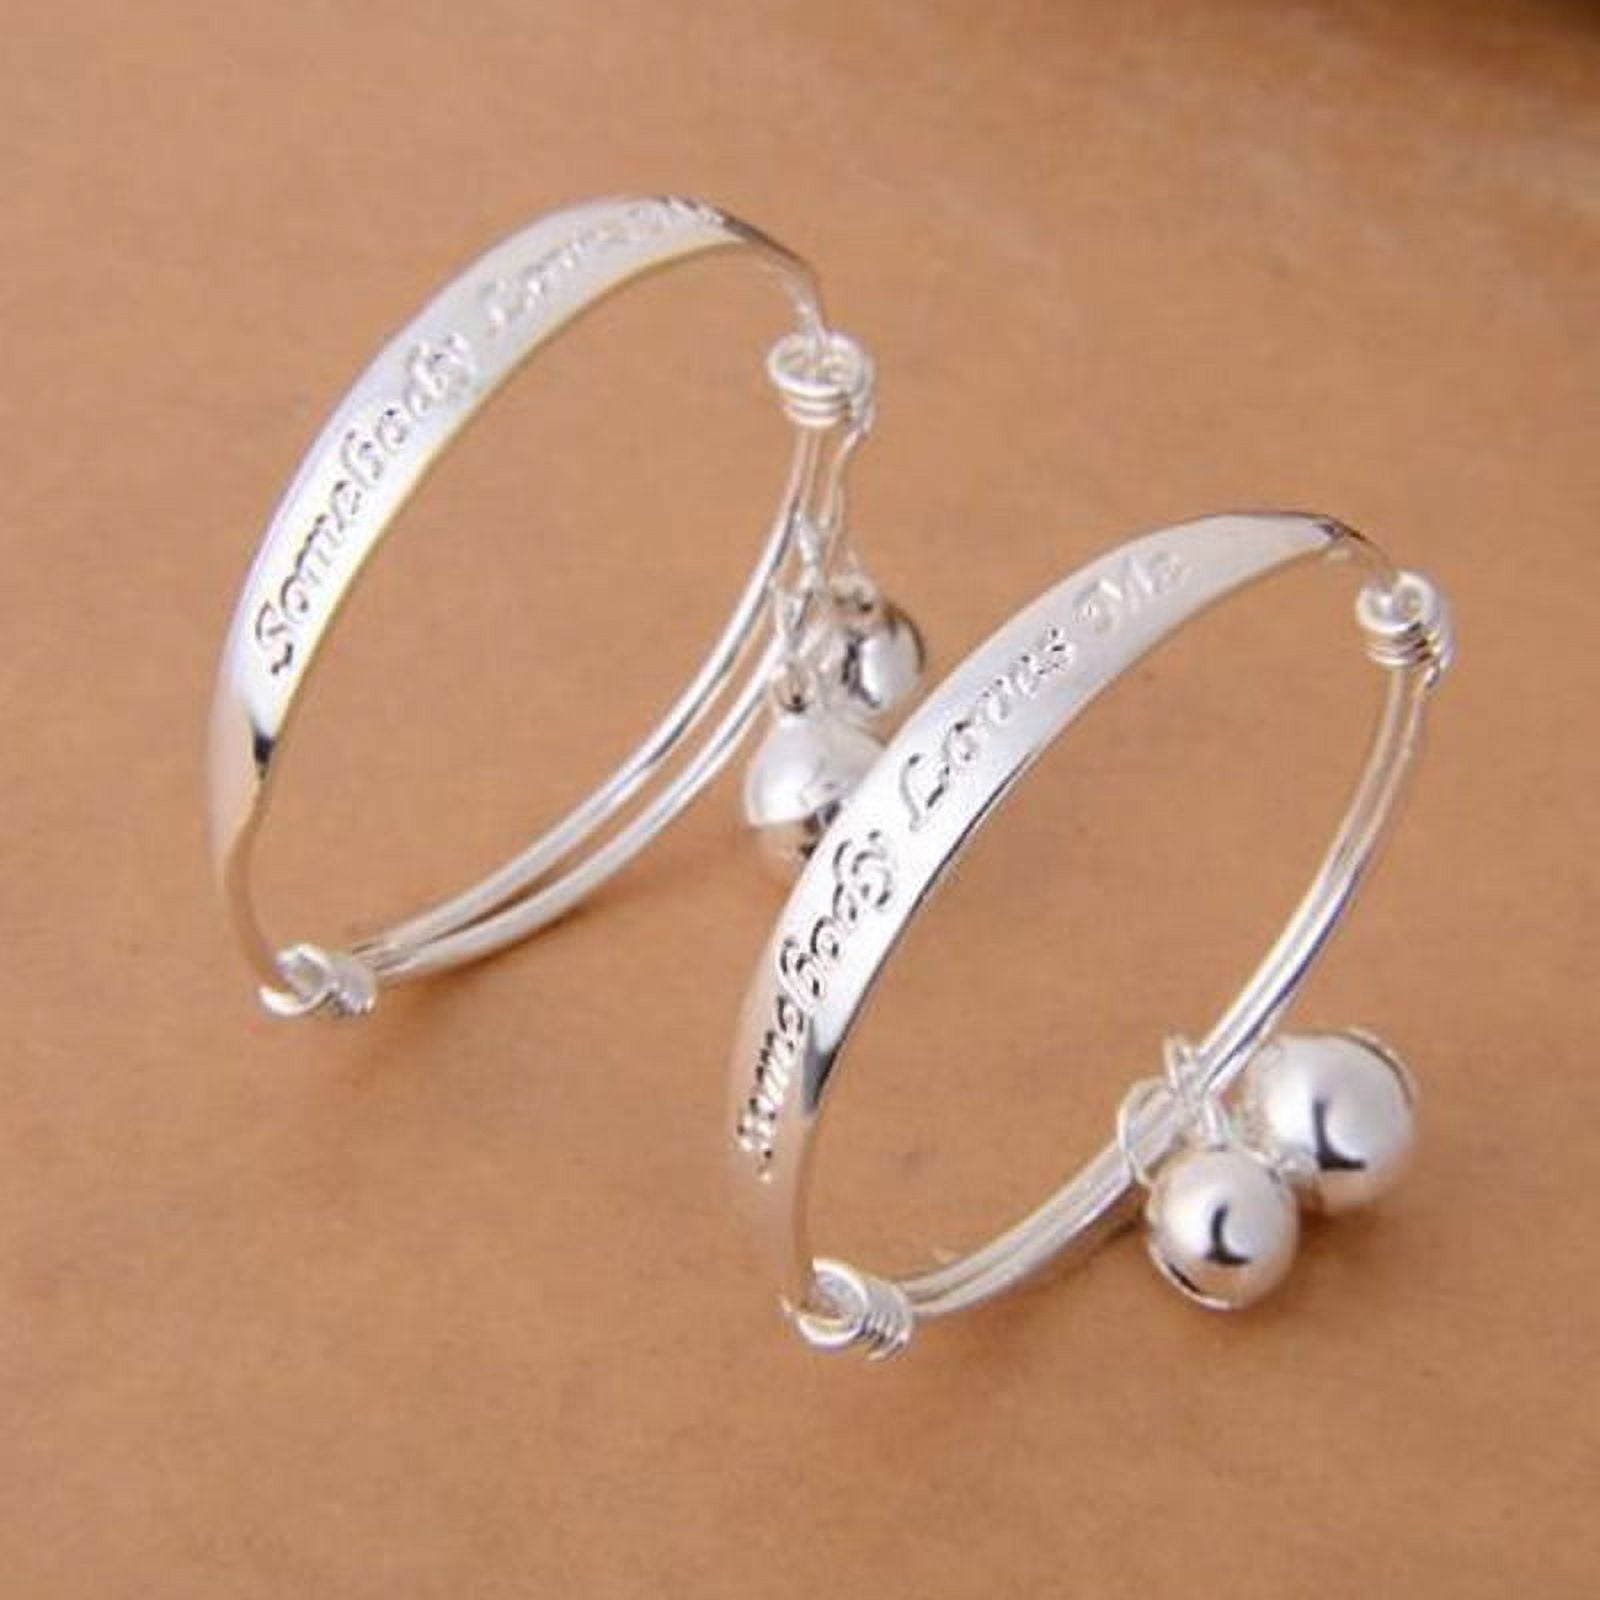 Baby Bracelets in Baby Jewelry | Silver - Walmart.com